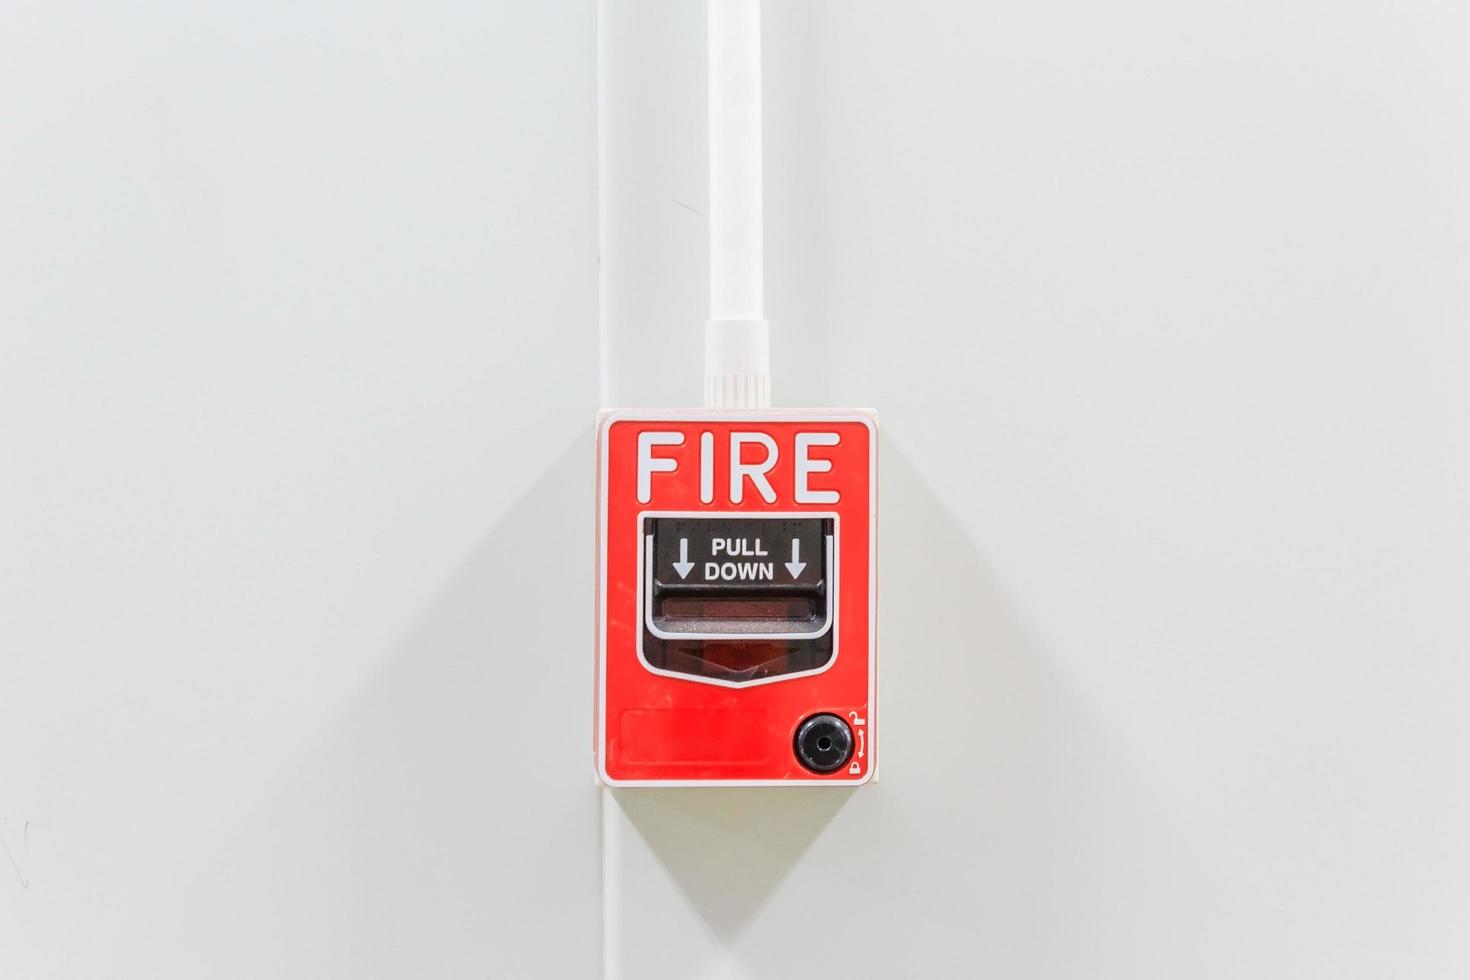 interruptor de alarme de incêndio na parede branca da fábrica foto